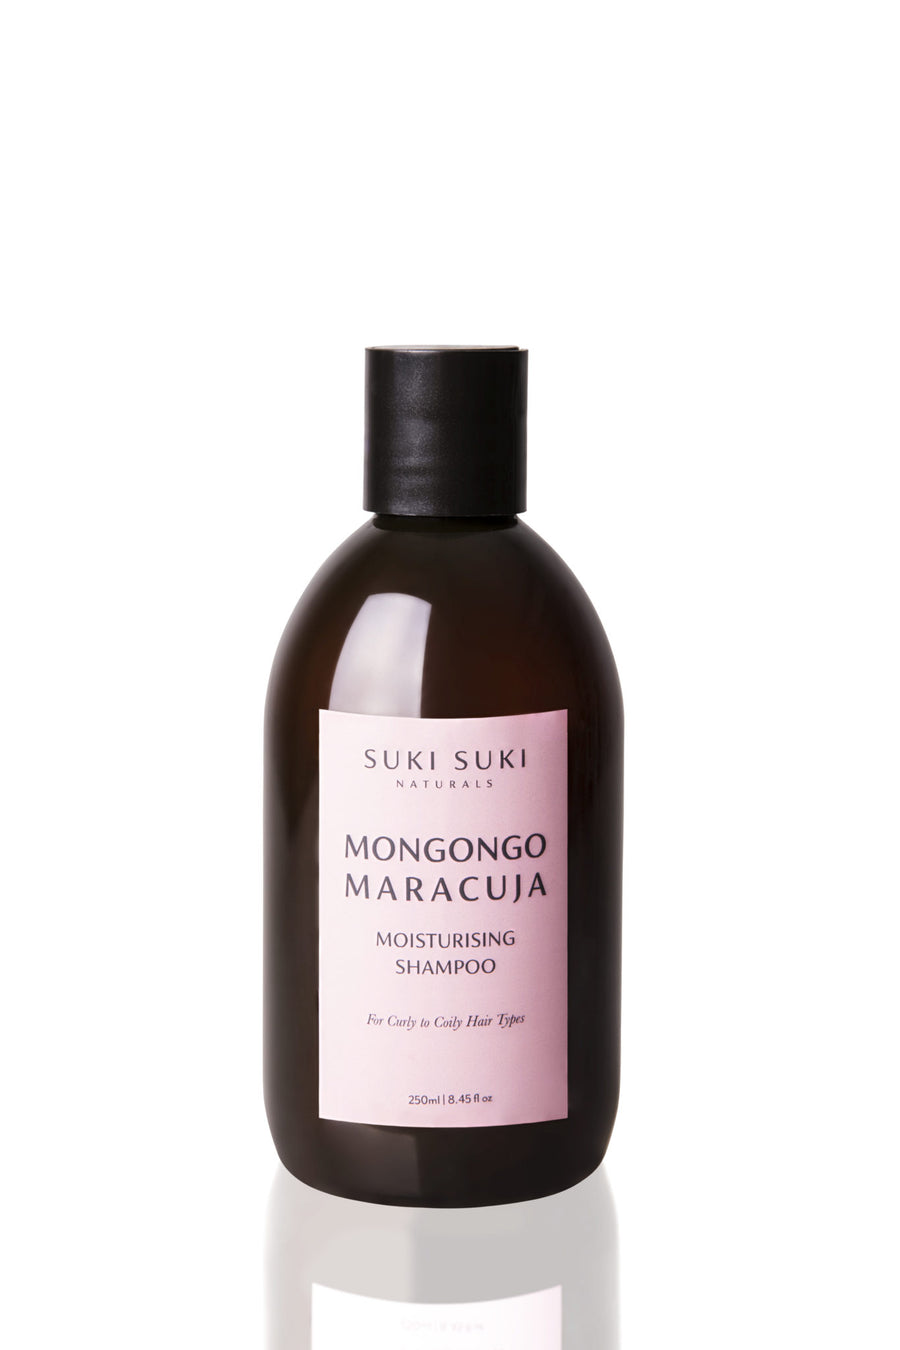 Mongongo Maracujá Moisturizing Shampoo.